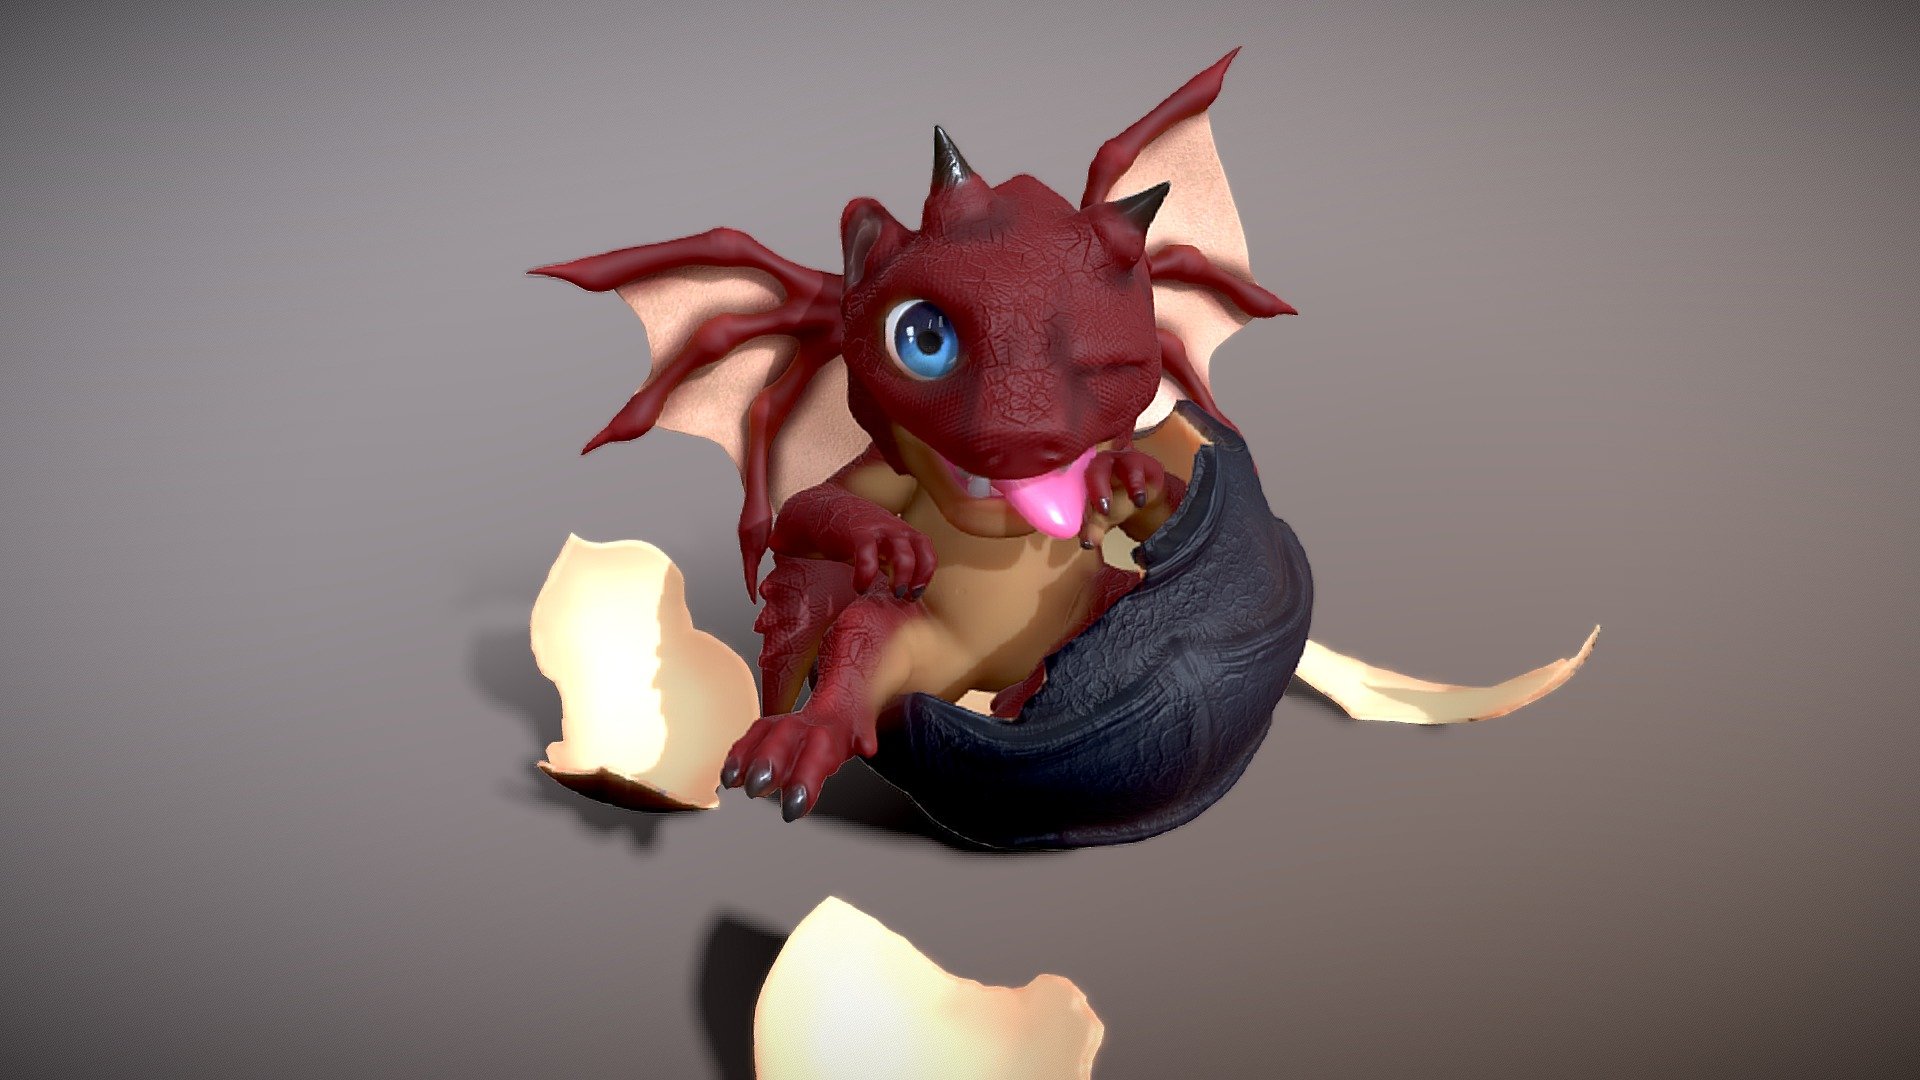 Red Baby Dragon - Download Free 3D model by SaVVyArt (@YoungSavvyArt)  [d364658]